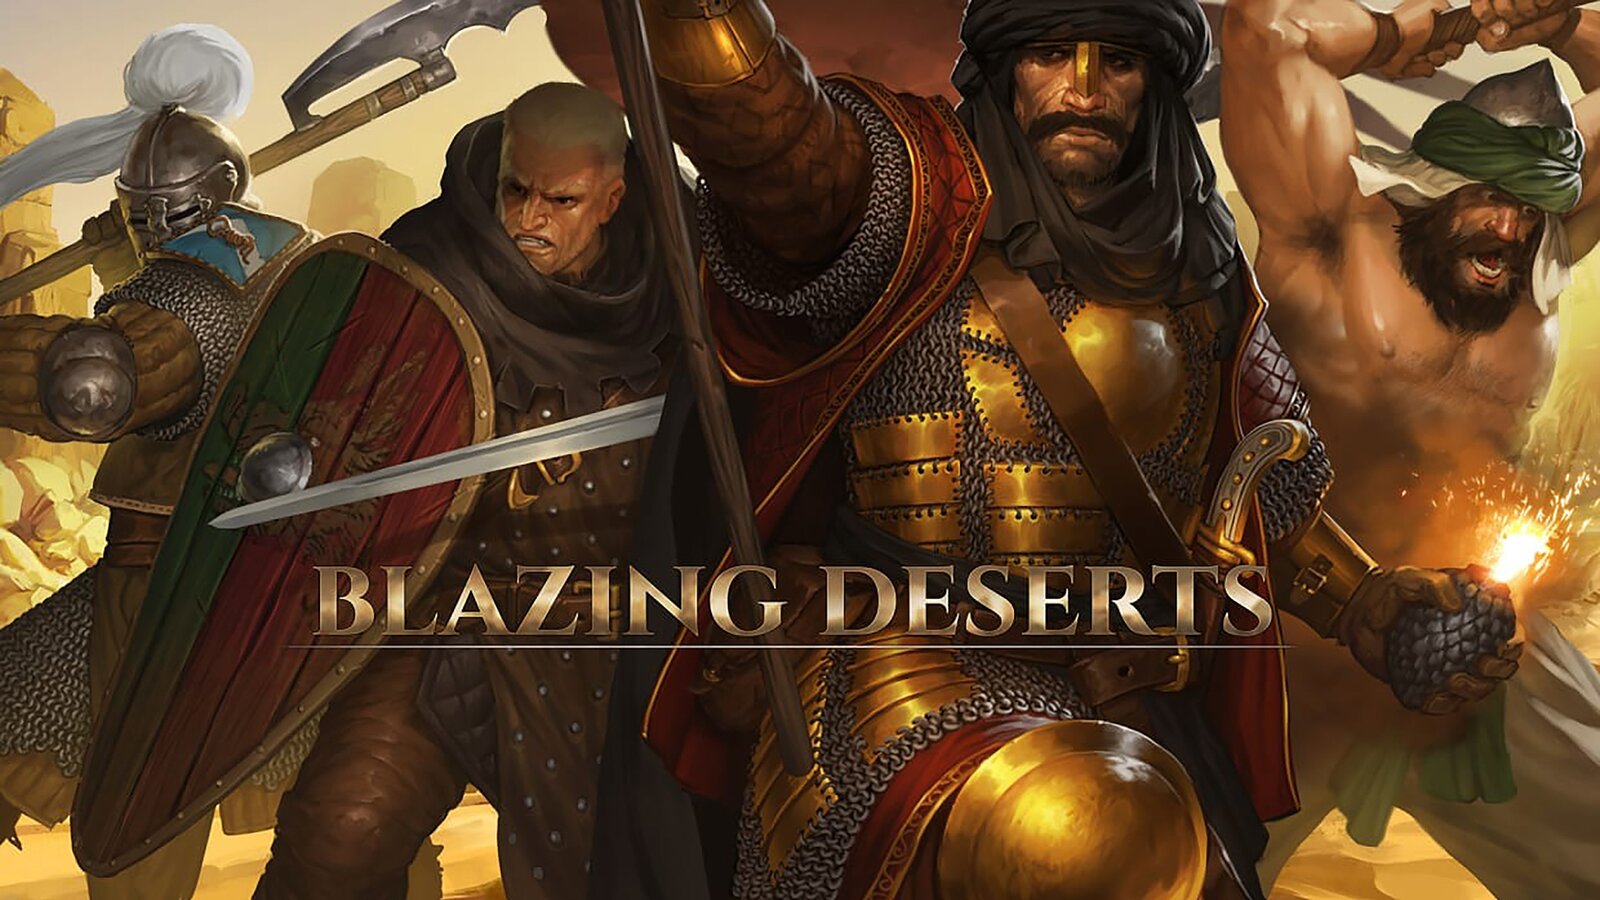 Battle Brothers - Blazing Deserts